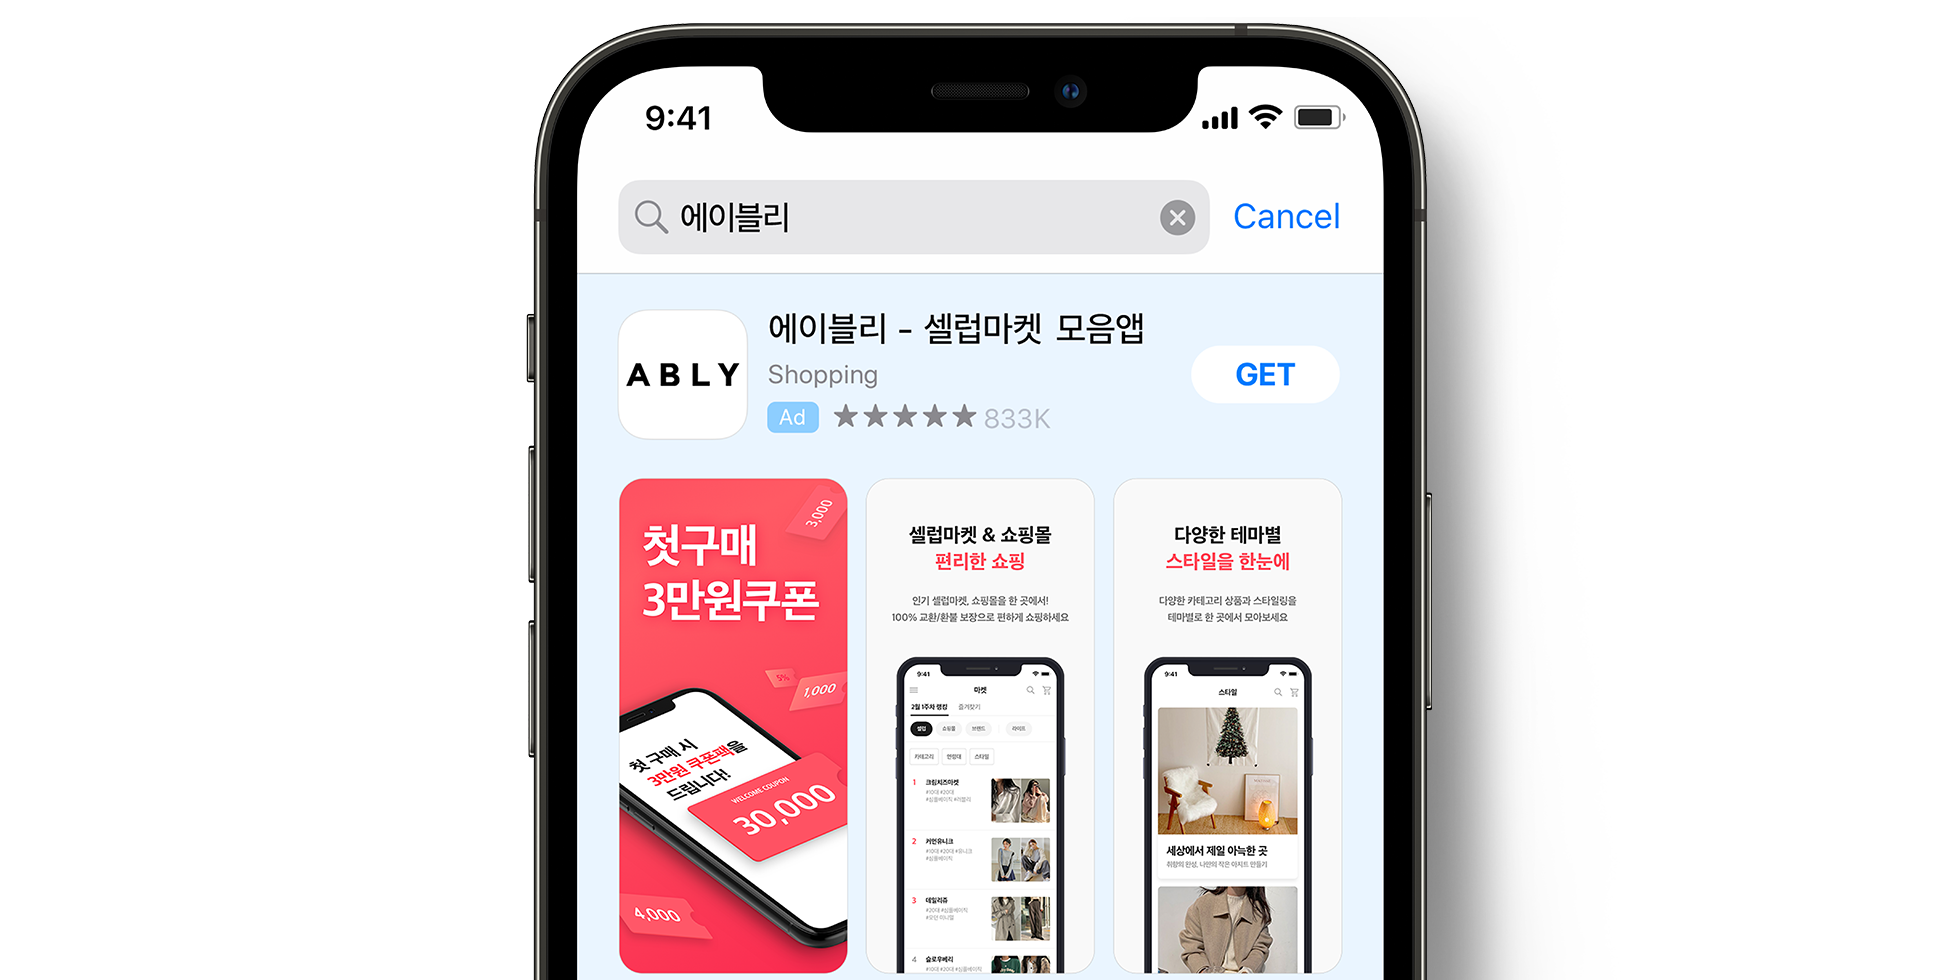 App Store 上的 ABLY 广告